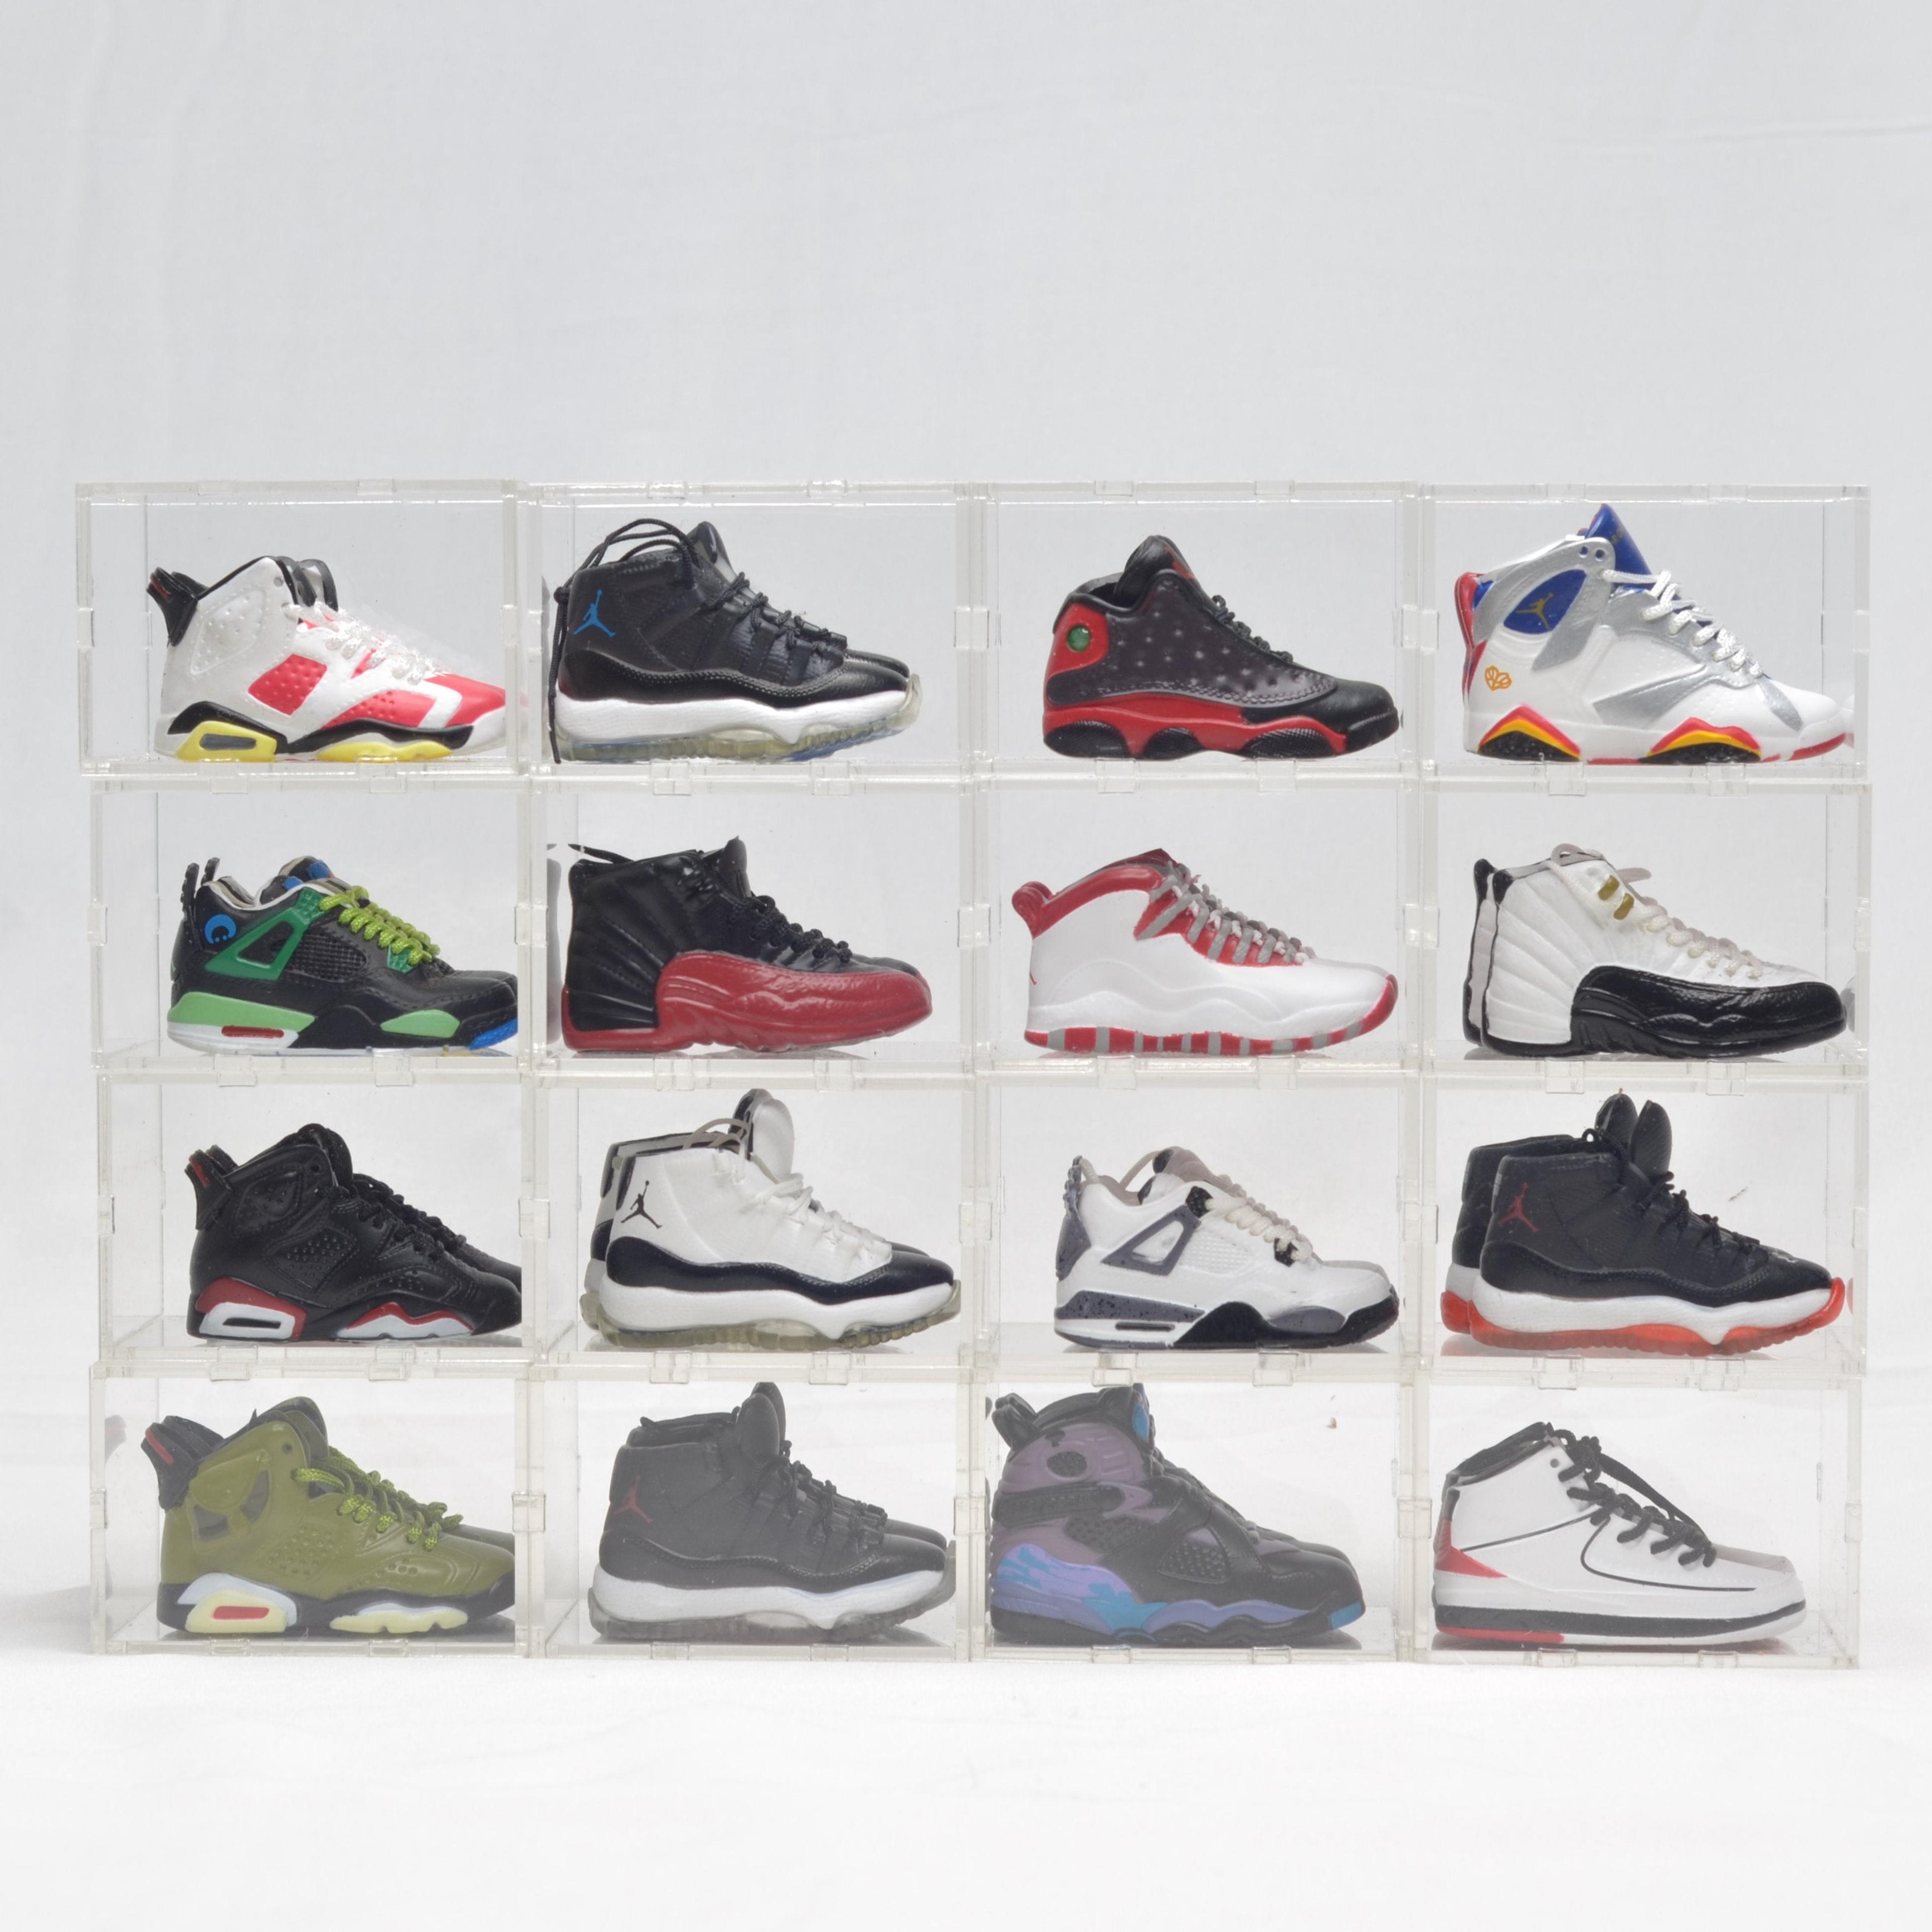 AJ2-AJ13 Mini Sneakers Collection with Display Storage Case